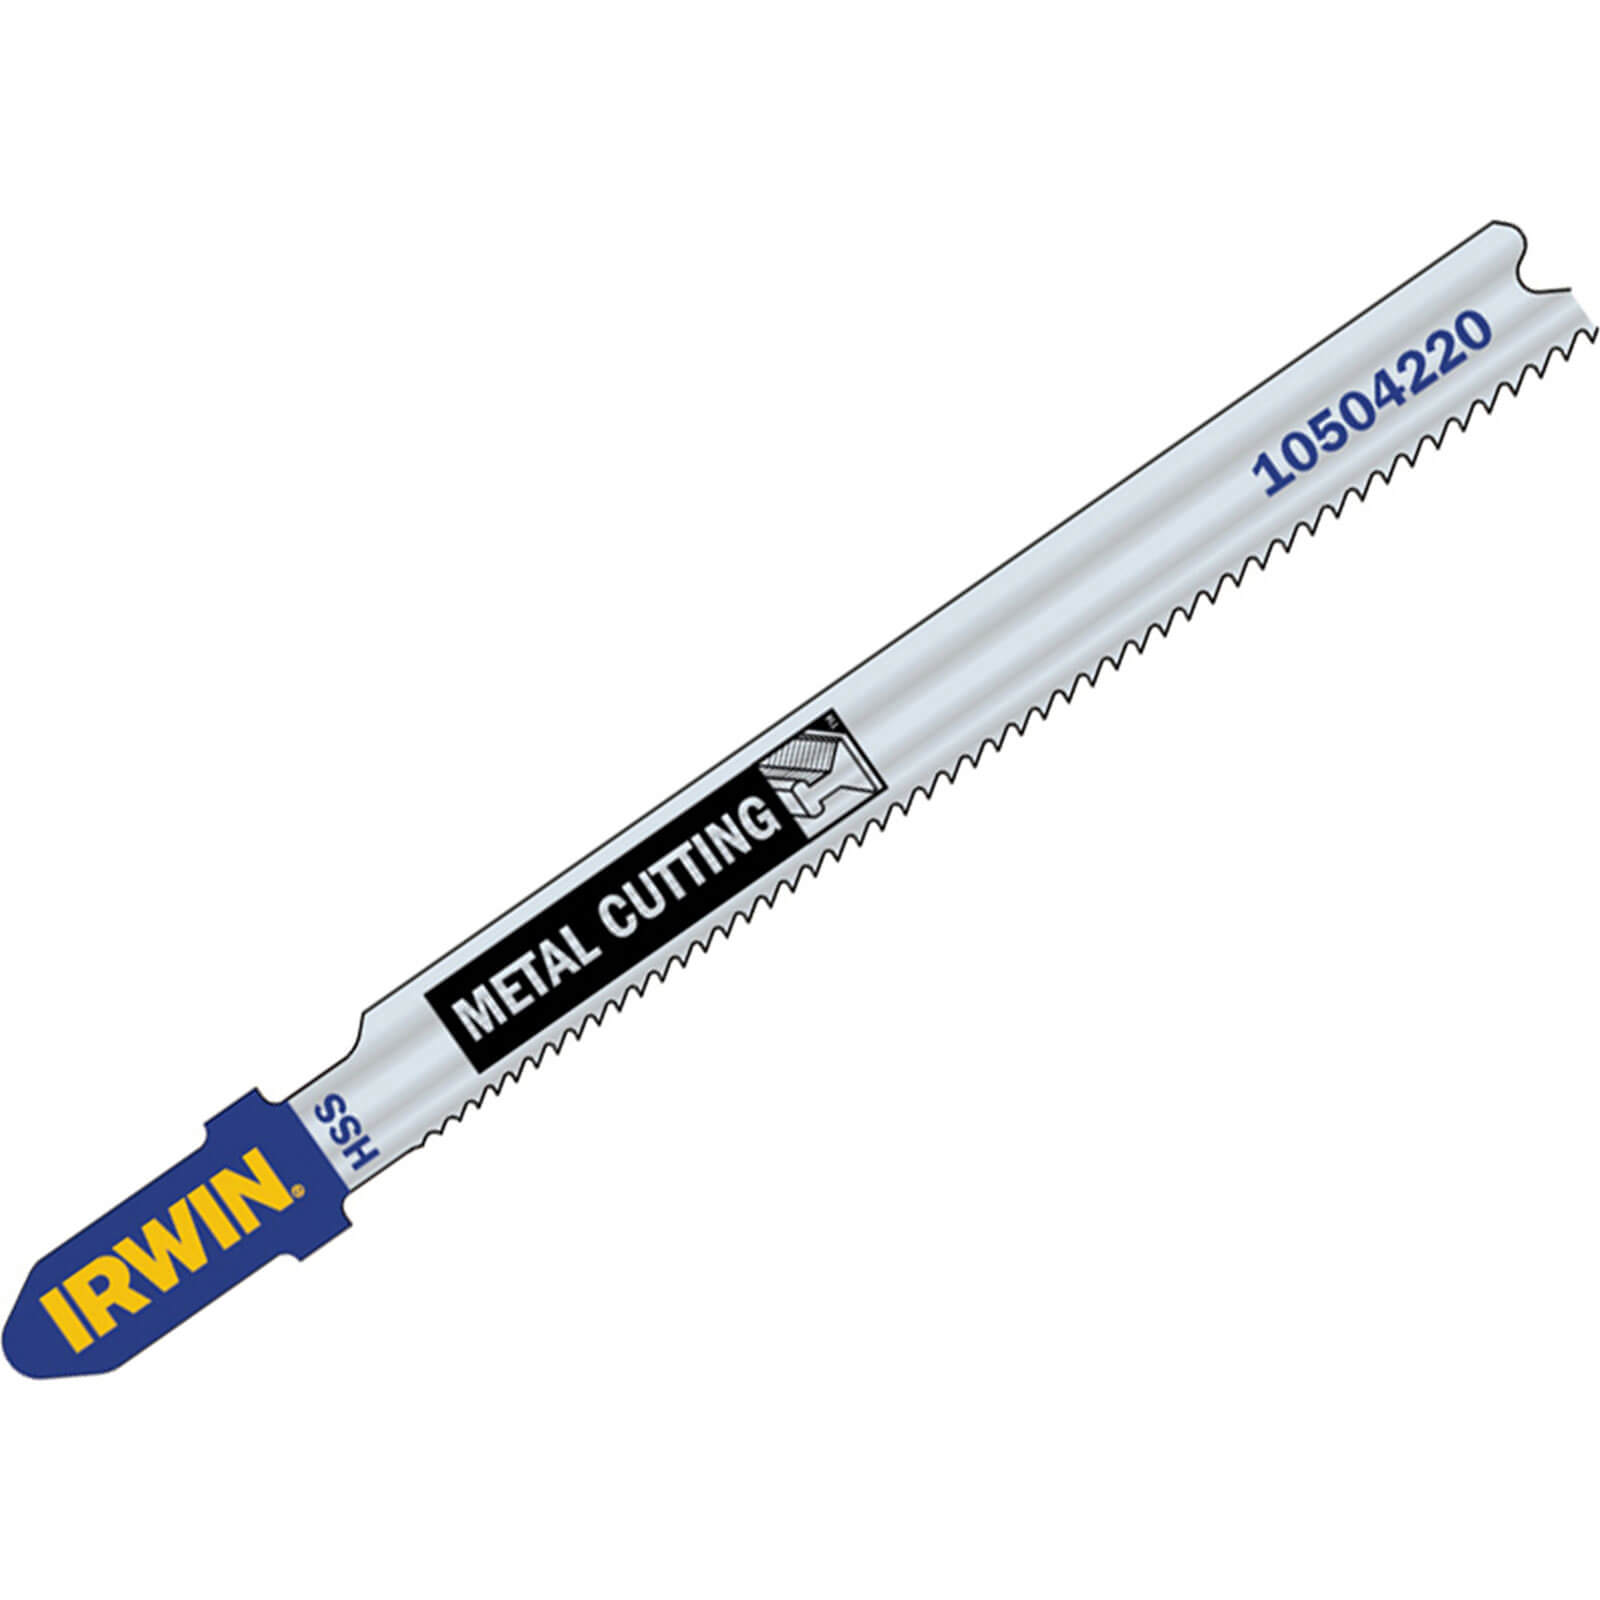 Photos - Power Tool Accessory IRWIN T123X T Shank Metal Cutting Jigsaw Blades Pack of 5 IRW10504233 